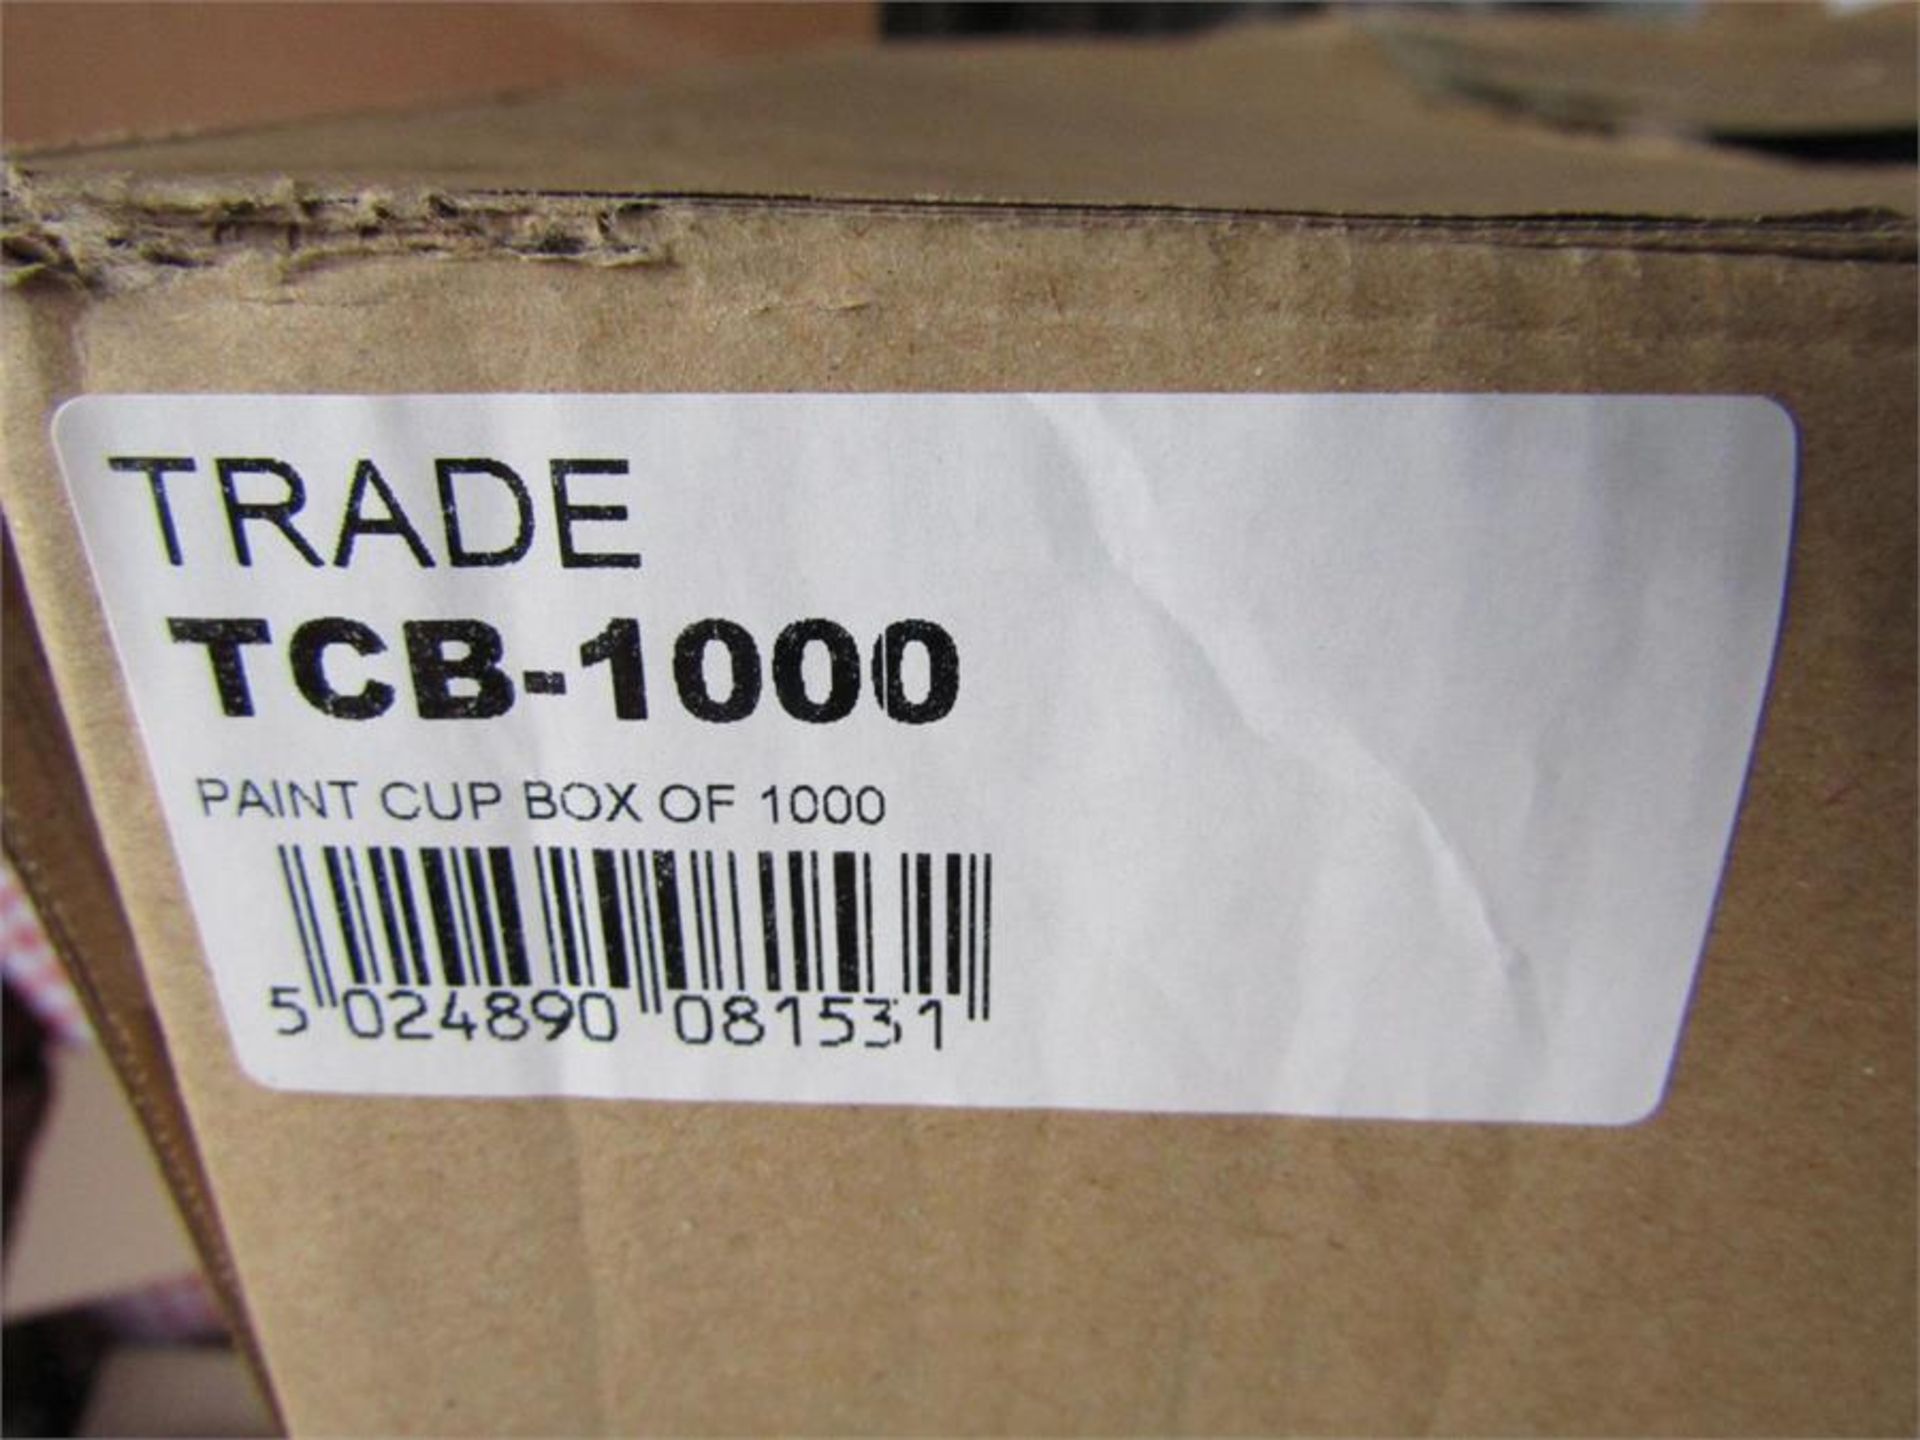 1000 x 600ml Cardboard Measuring Cups - Paint Measure - TCB-1000 164366 - Image 4 of 4